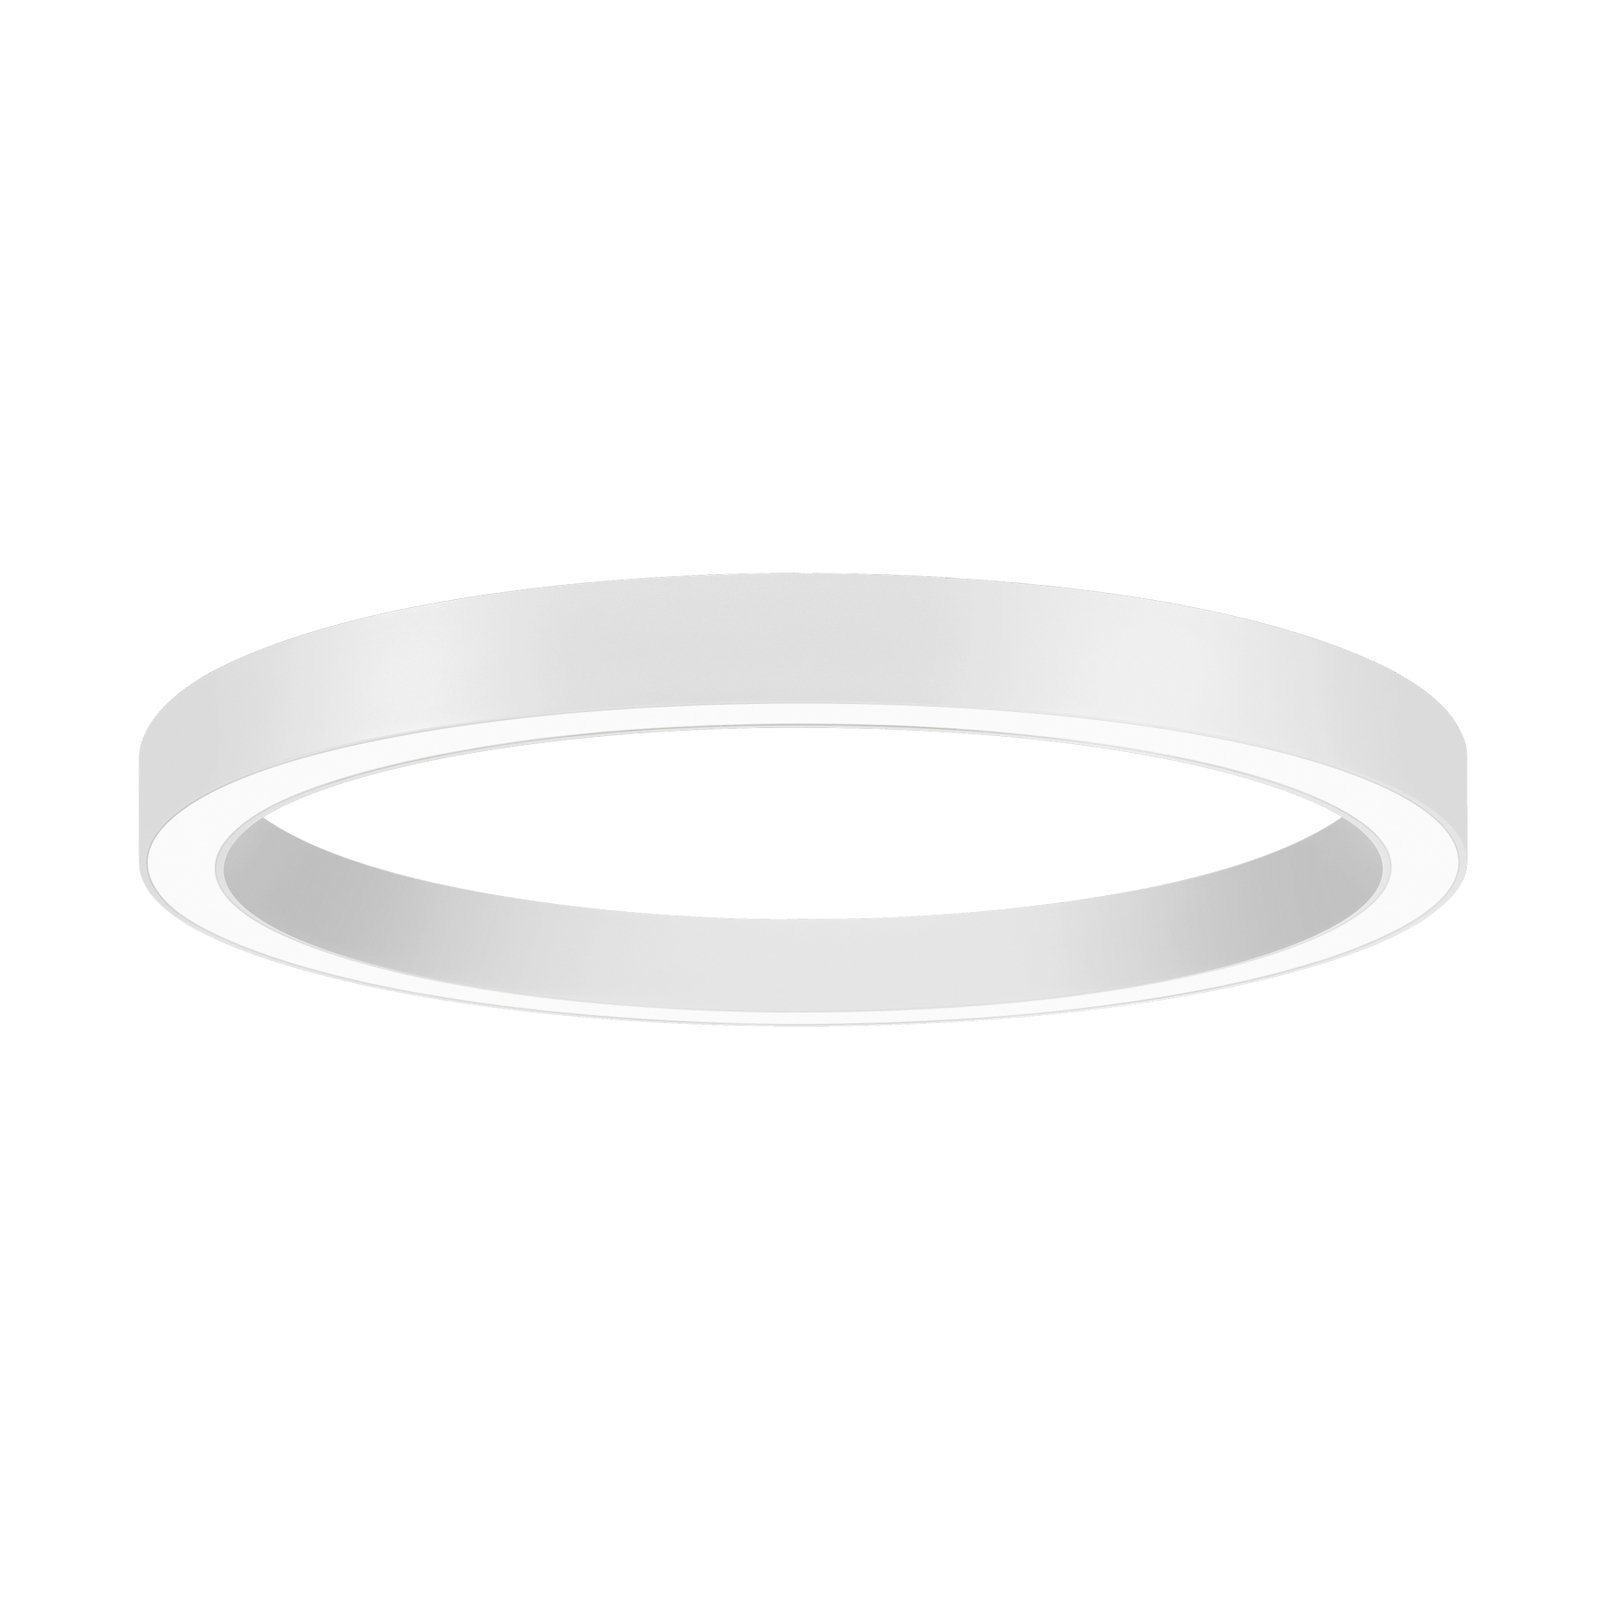 BRUMBERG Biro Circle Ring, Ø 60 cm, Casambi, blanc, 840